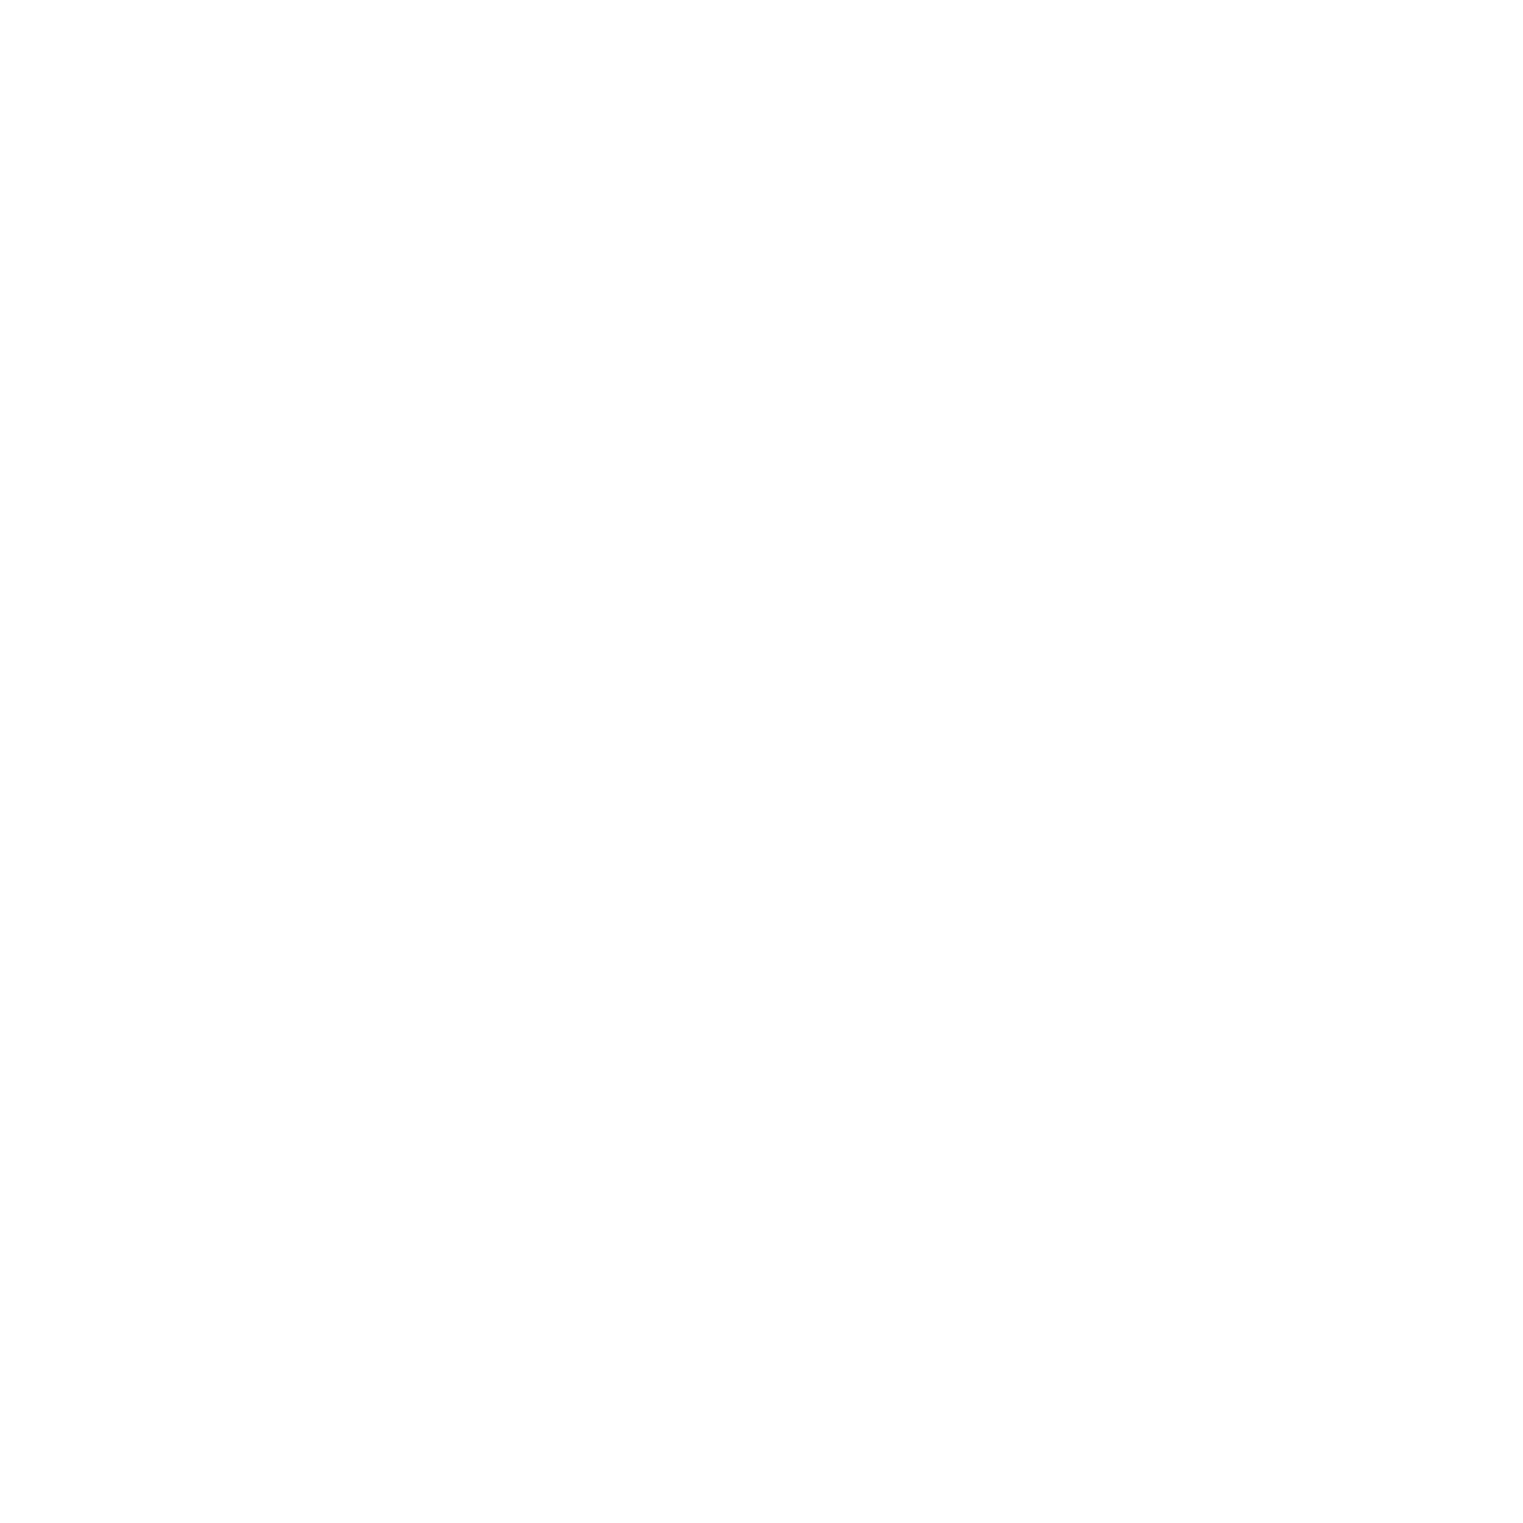 Jyske Bank logo pour fonds sombres (PNG transparent)